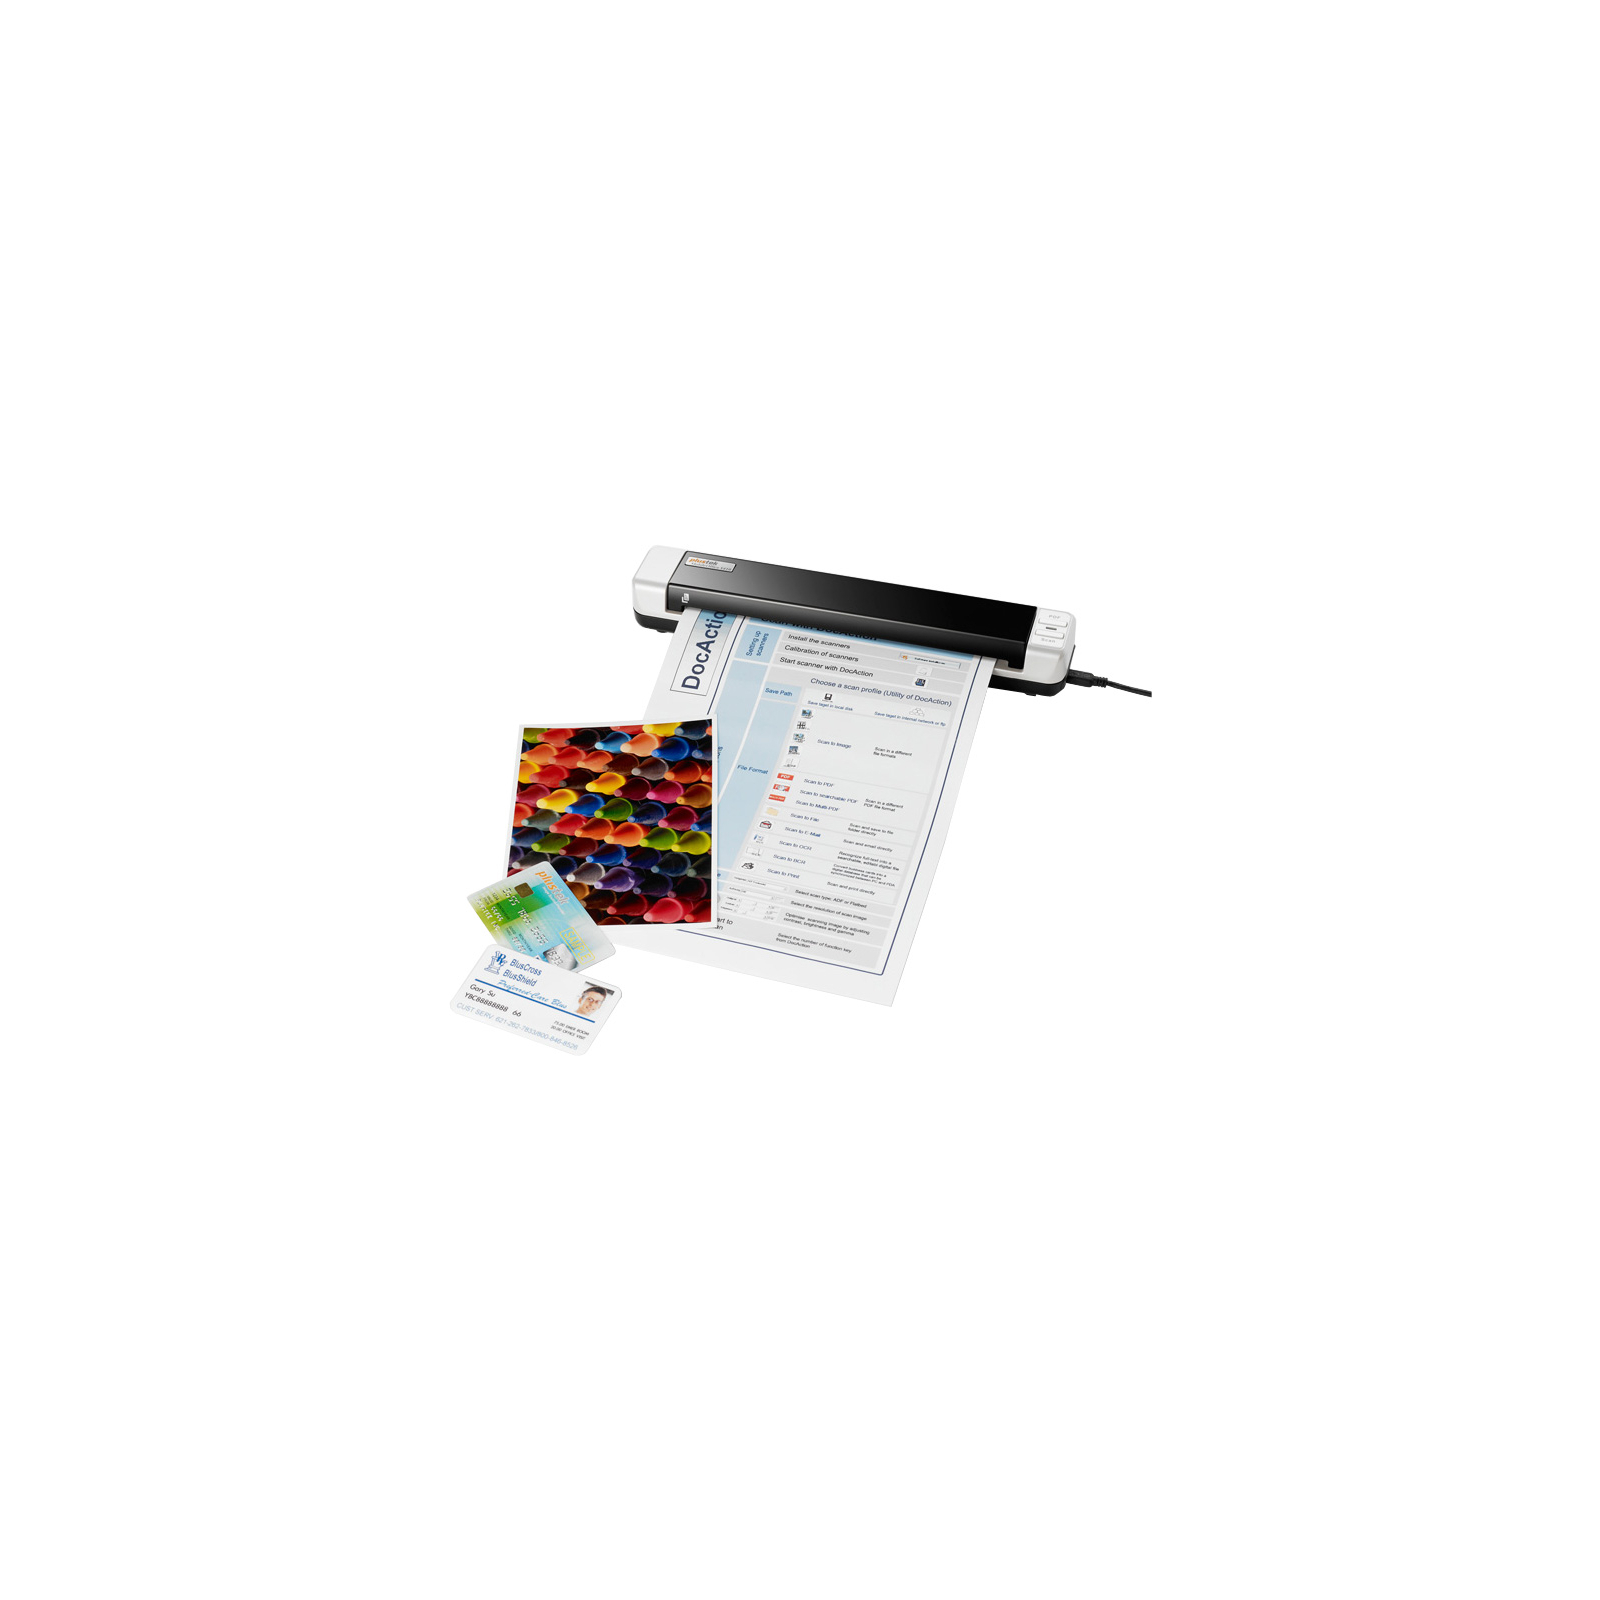 Сканер Plustek MobileOffice S410 (0223TS) изображение 3